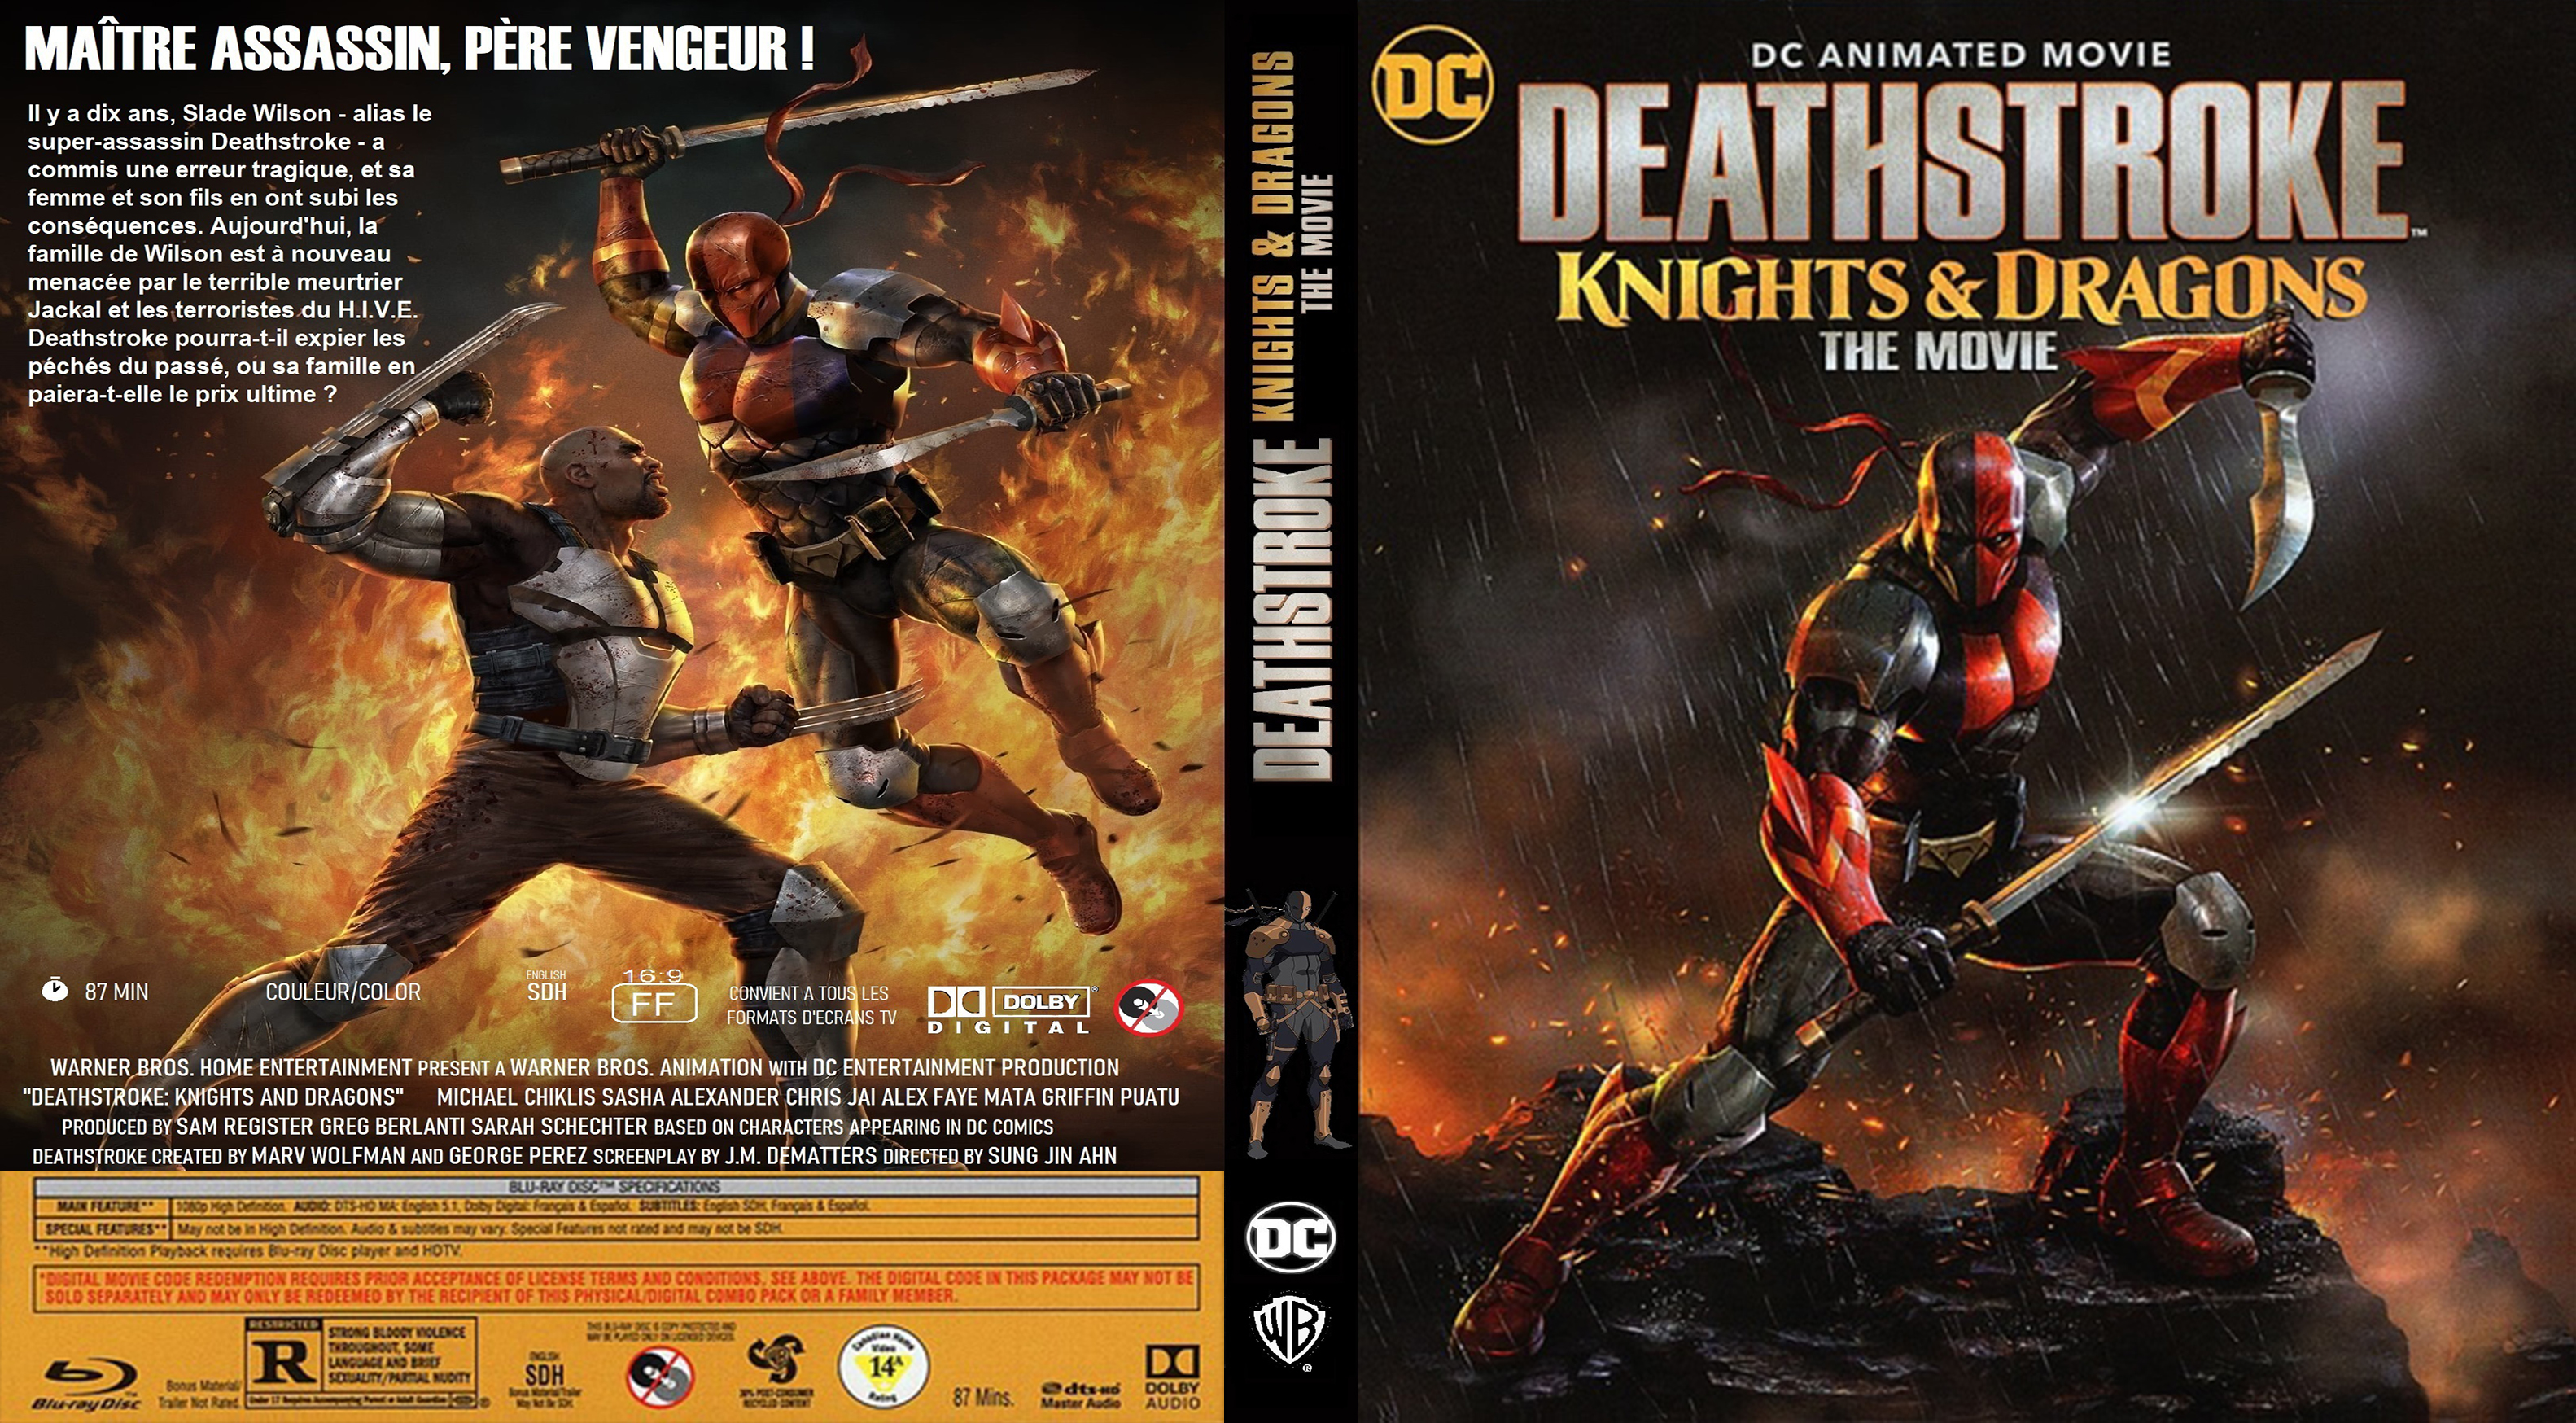 Jaquette DVD Deathstroke Knights & Dragons custom (BLU-RAY)